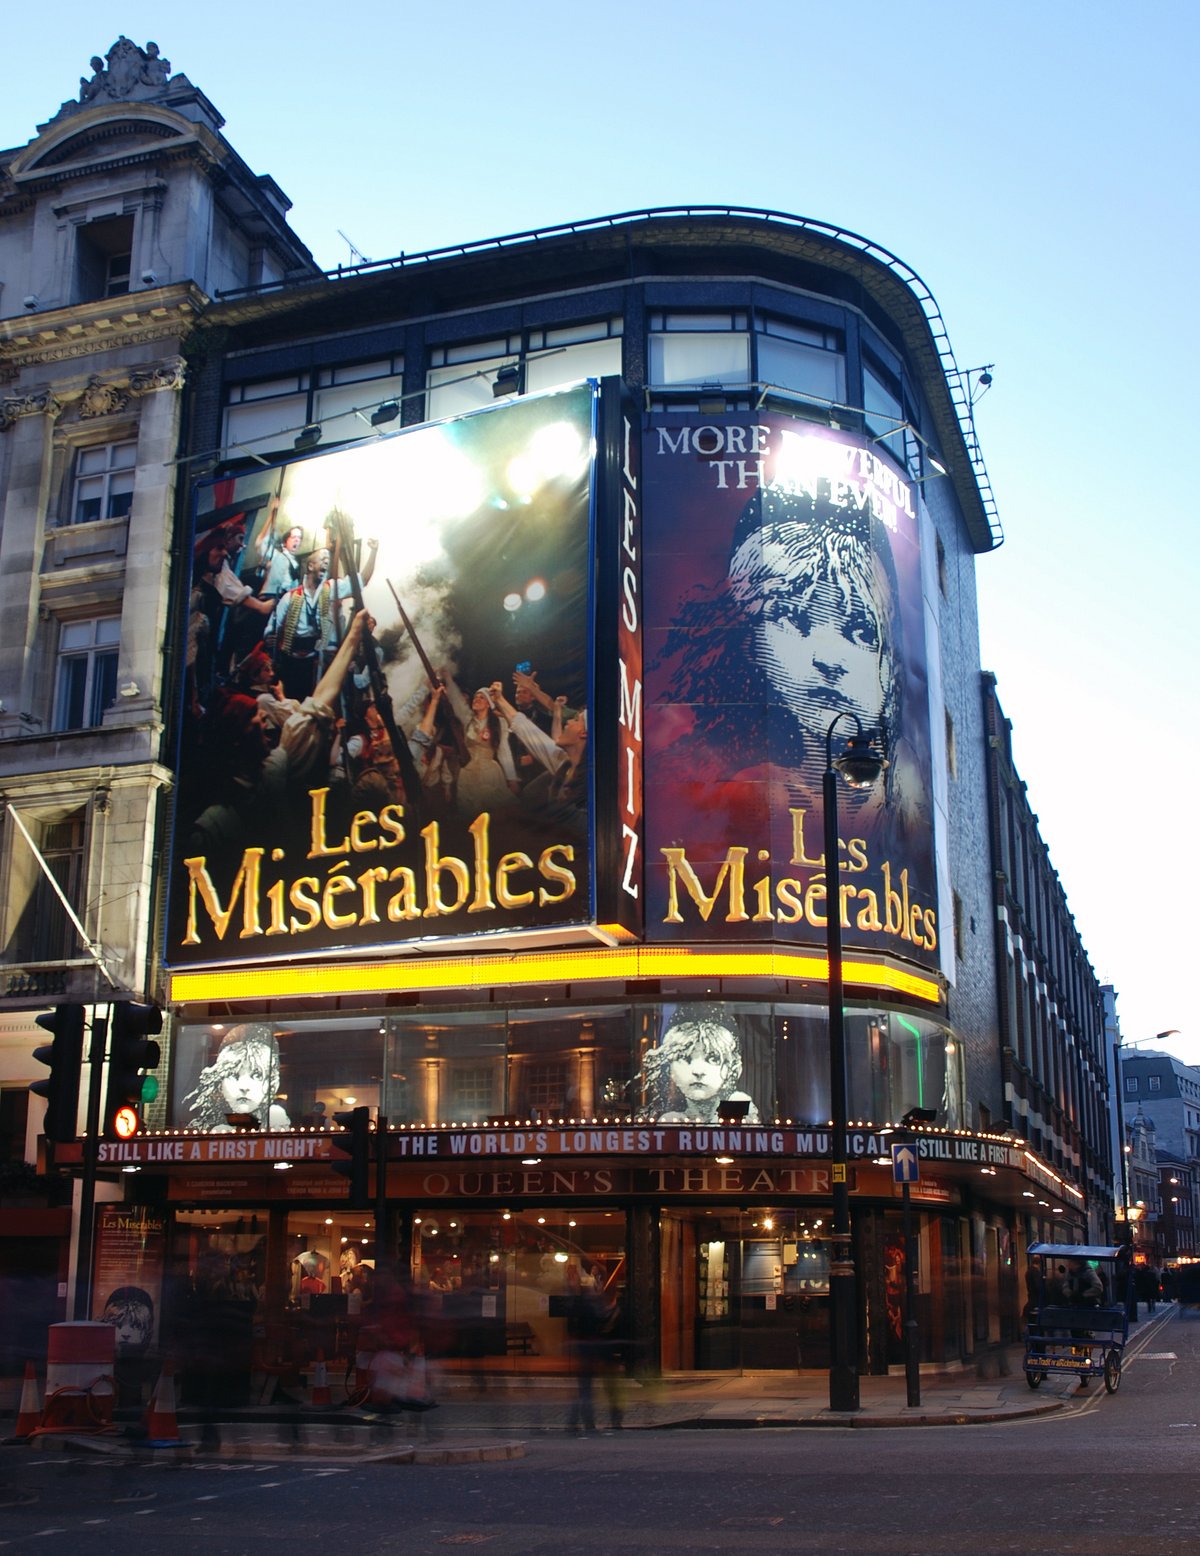 theatre trips in london